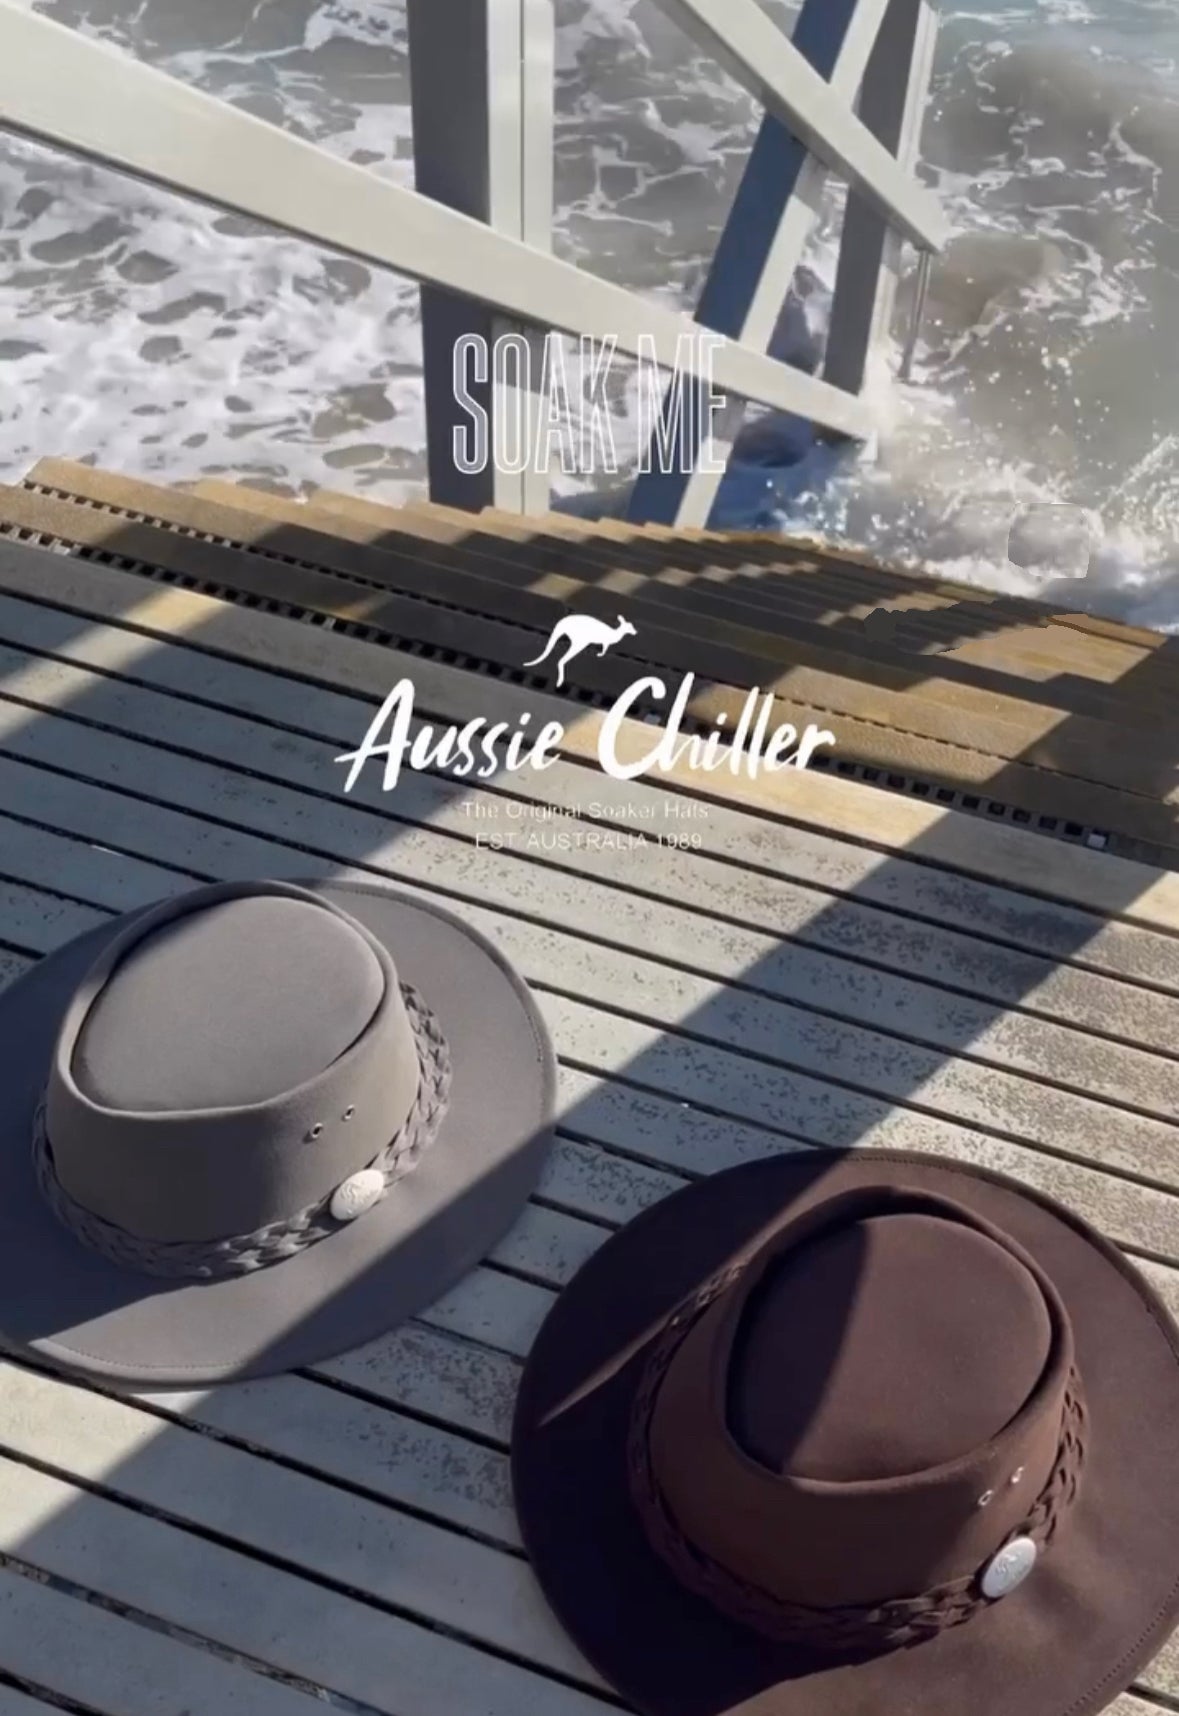 Cooling Hat for Men Aussie Soaker Hat Natural Large/XLarge